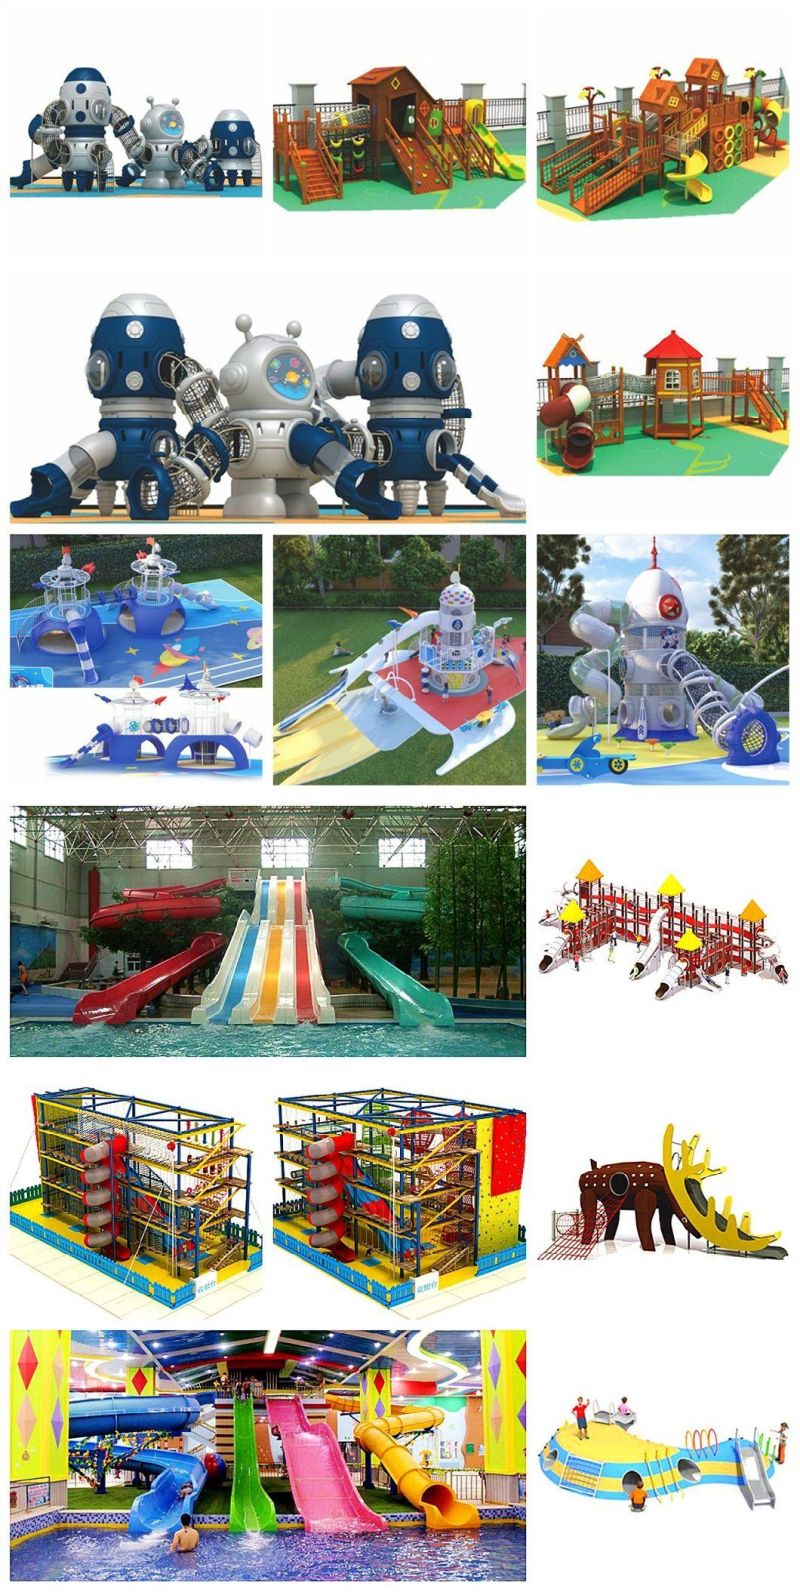 Outdoor Park Kids Playground Equipment Space Series Climbing Slide Yq46